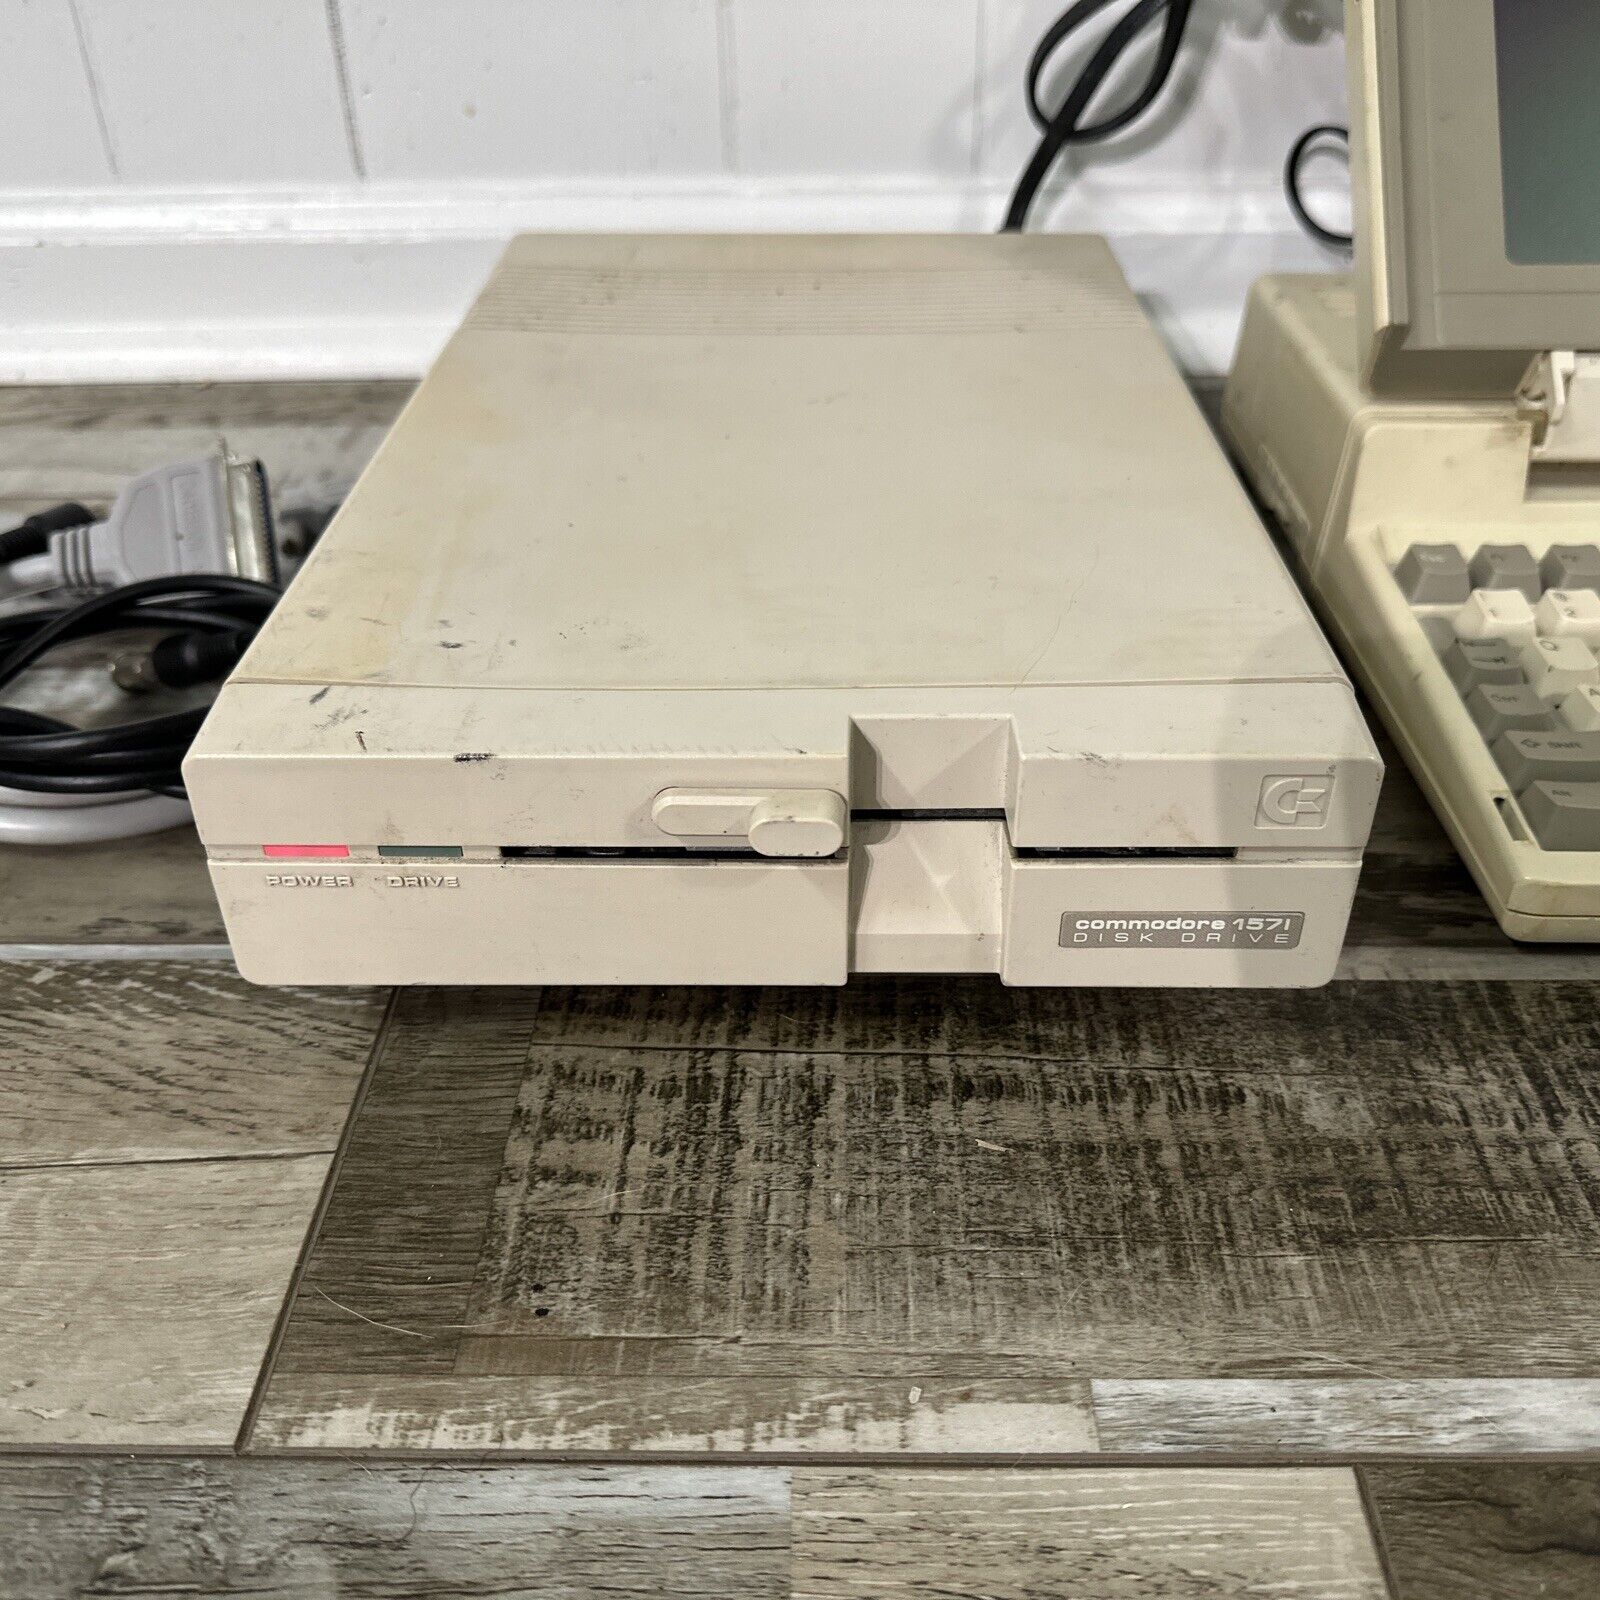 Commodore 1571 Floppy Disk Drive w/ Original JiffyDOS